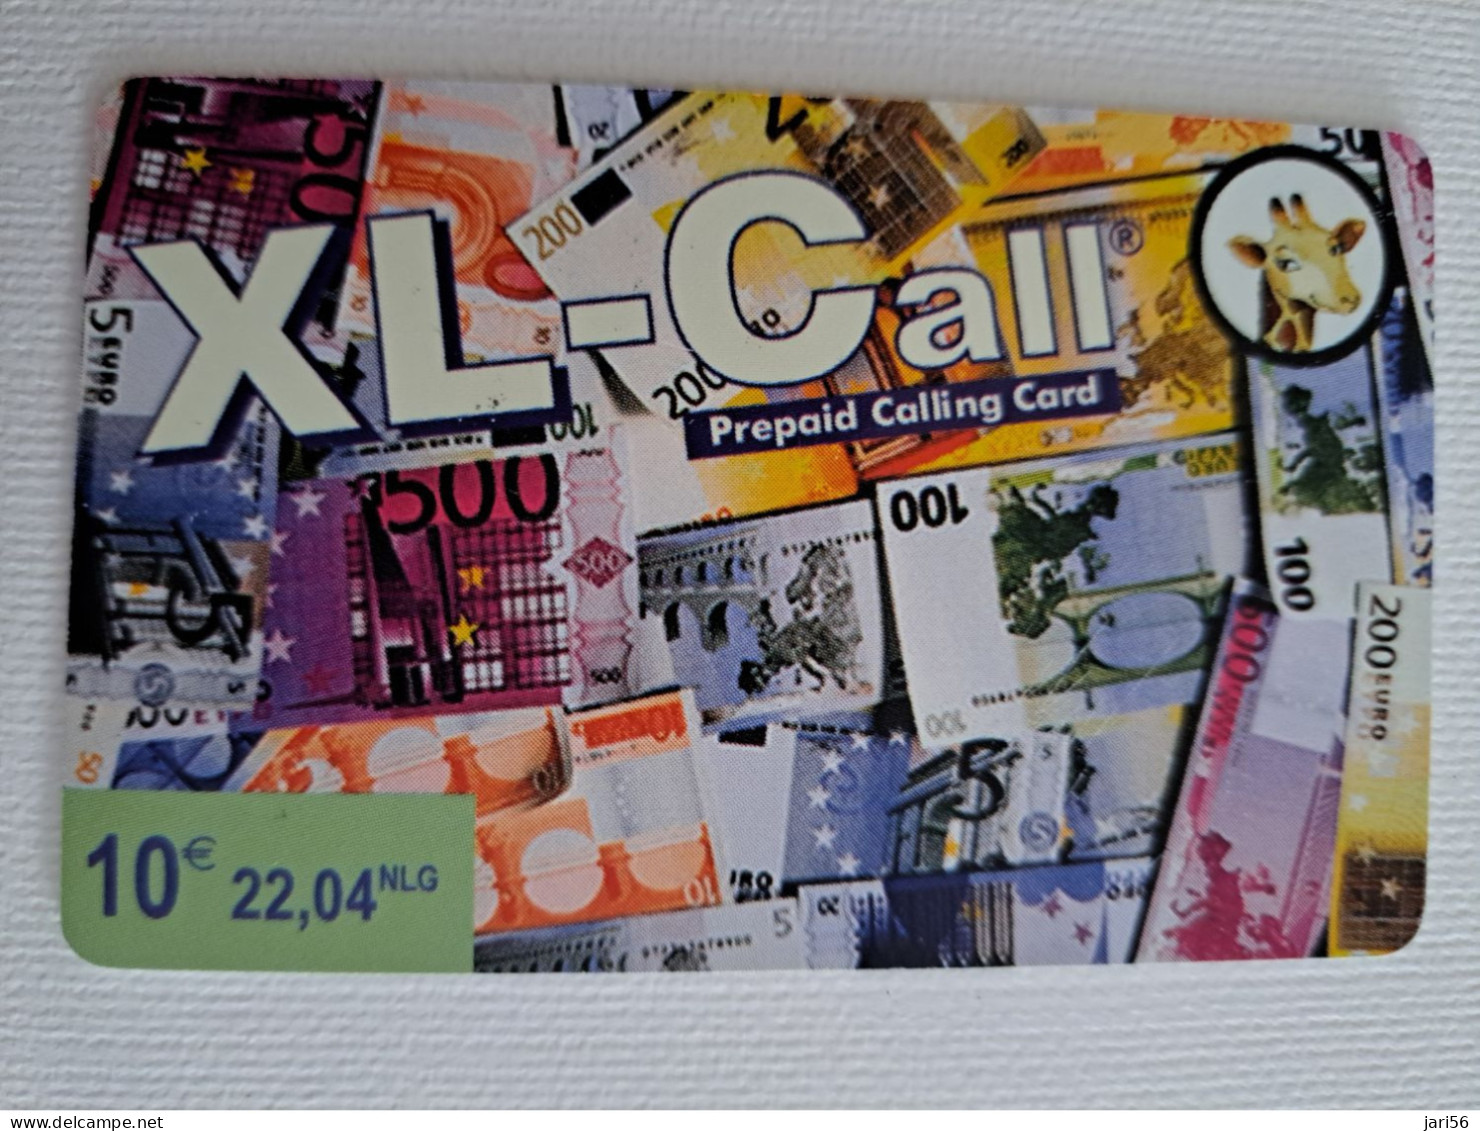 NETHERLANDS  HFL 10,-  XL-CALL  /BANKNOTES     / OLDER CARD    PREPAID  Nice Used  ** 15766** - [3] Sim Cards, Prepaid & Refills